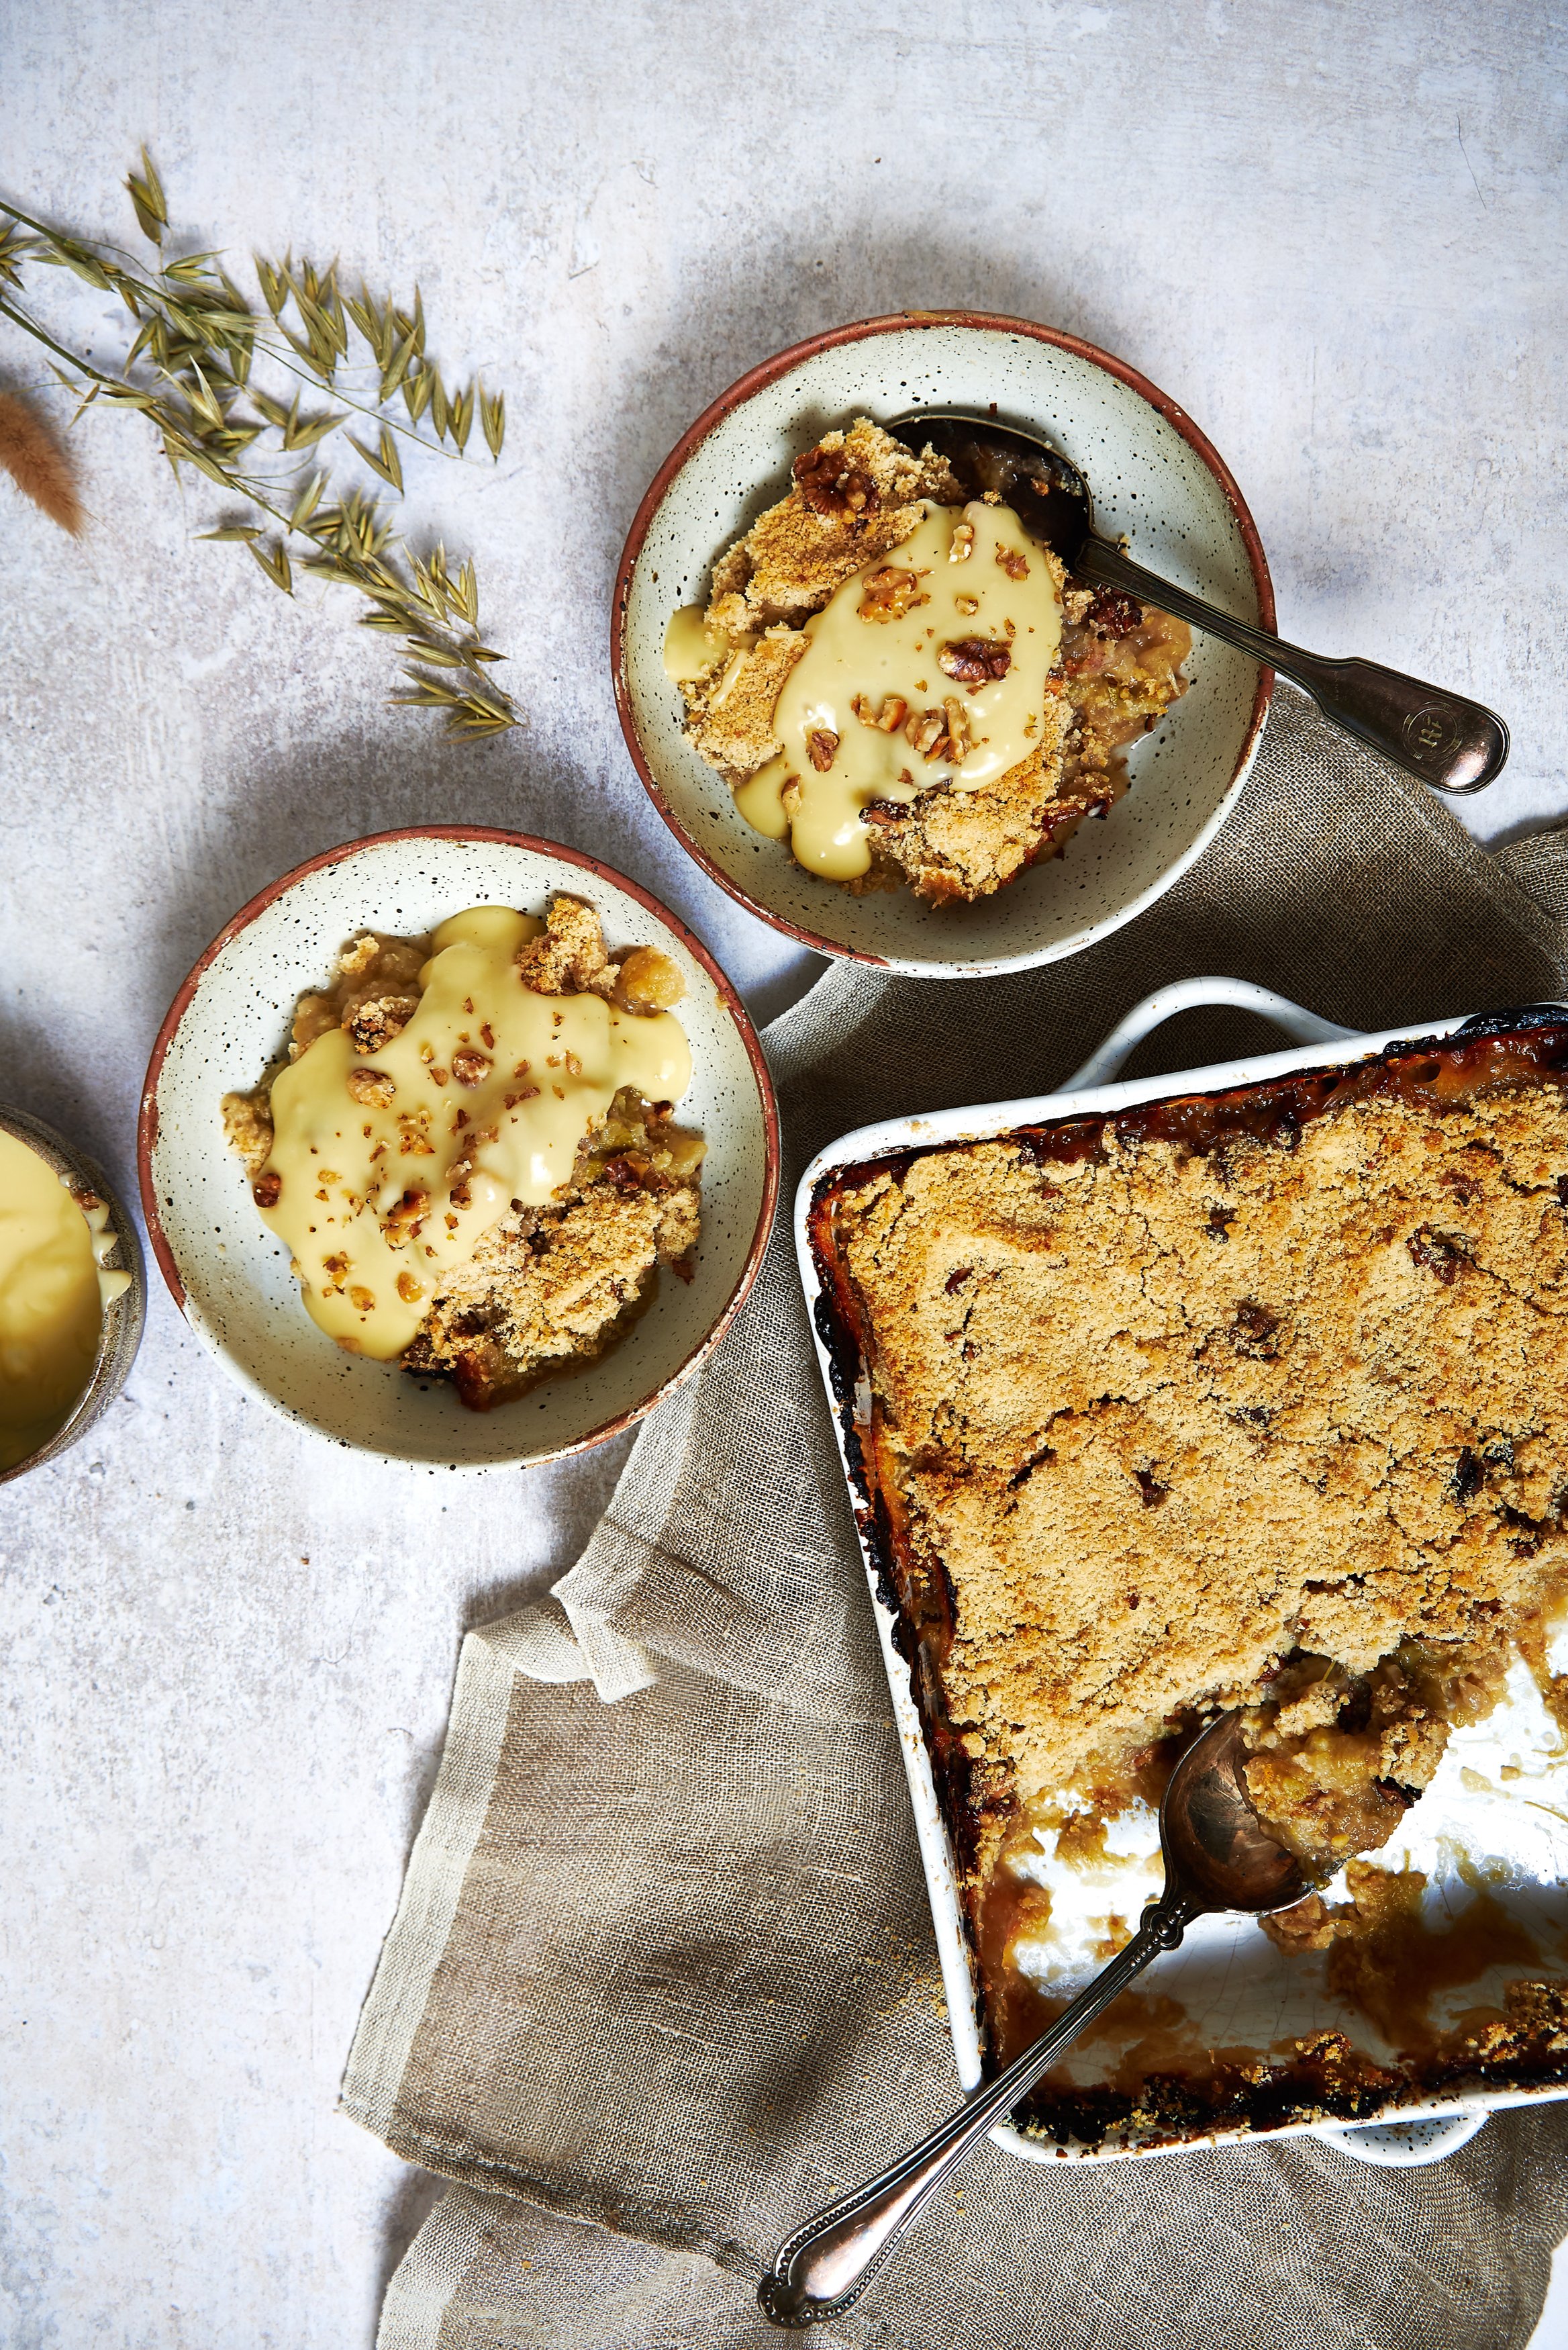 Rhubard and apple crumble in baking dish and bowls